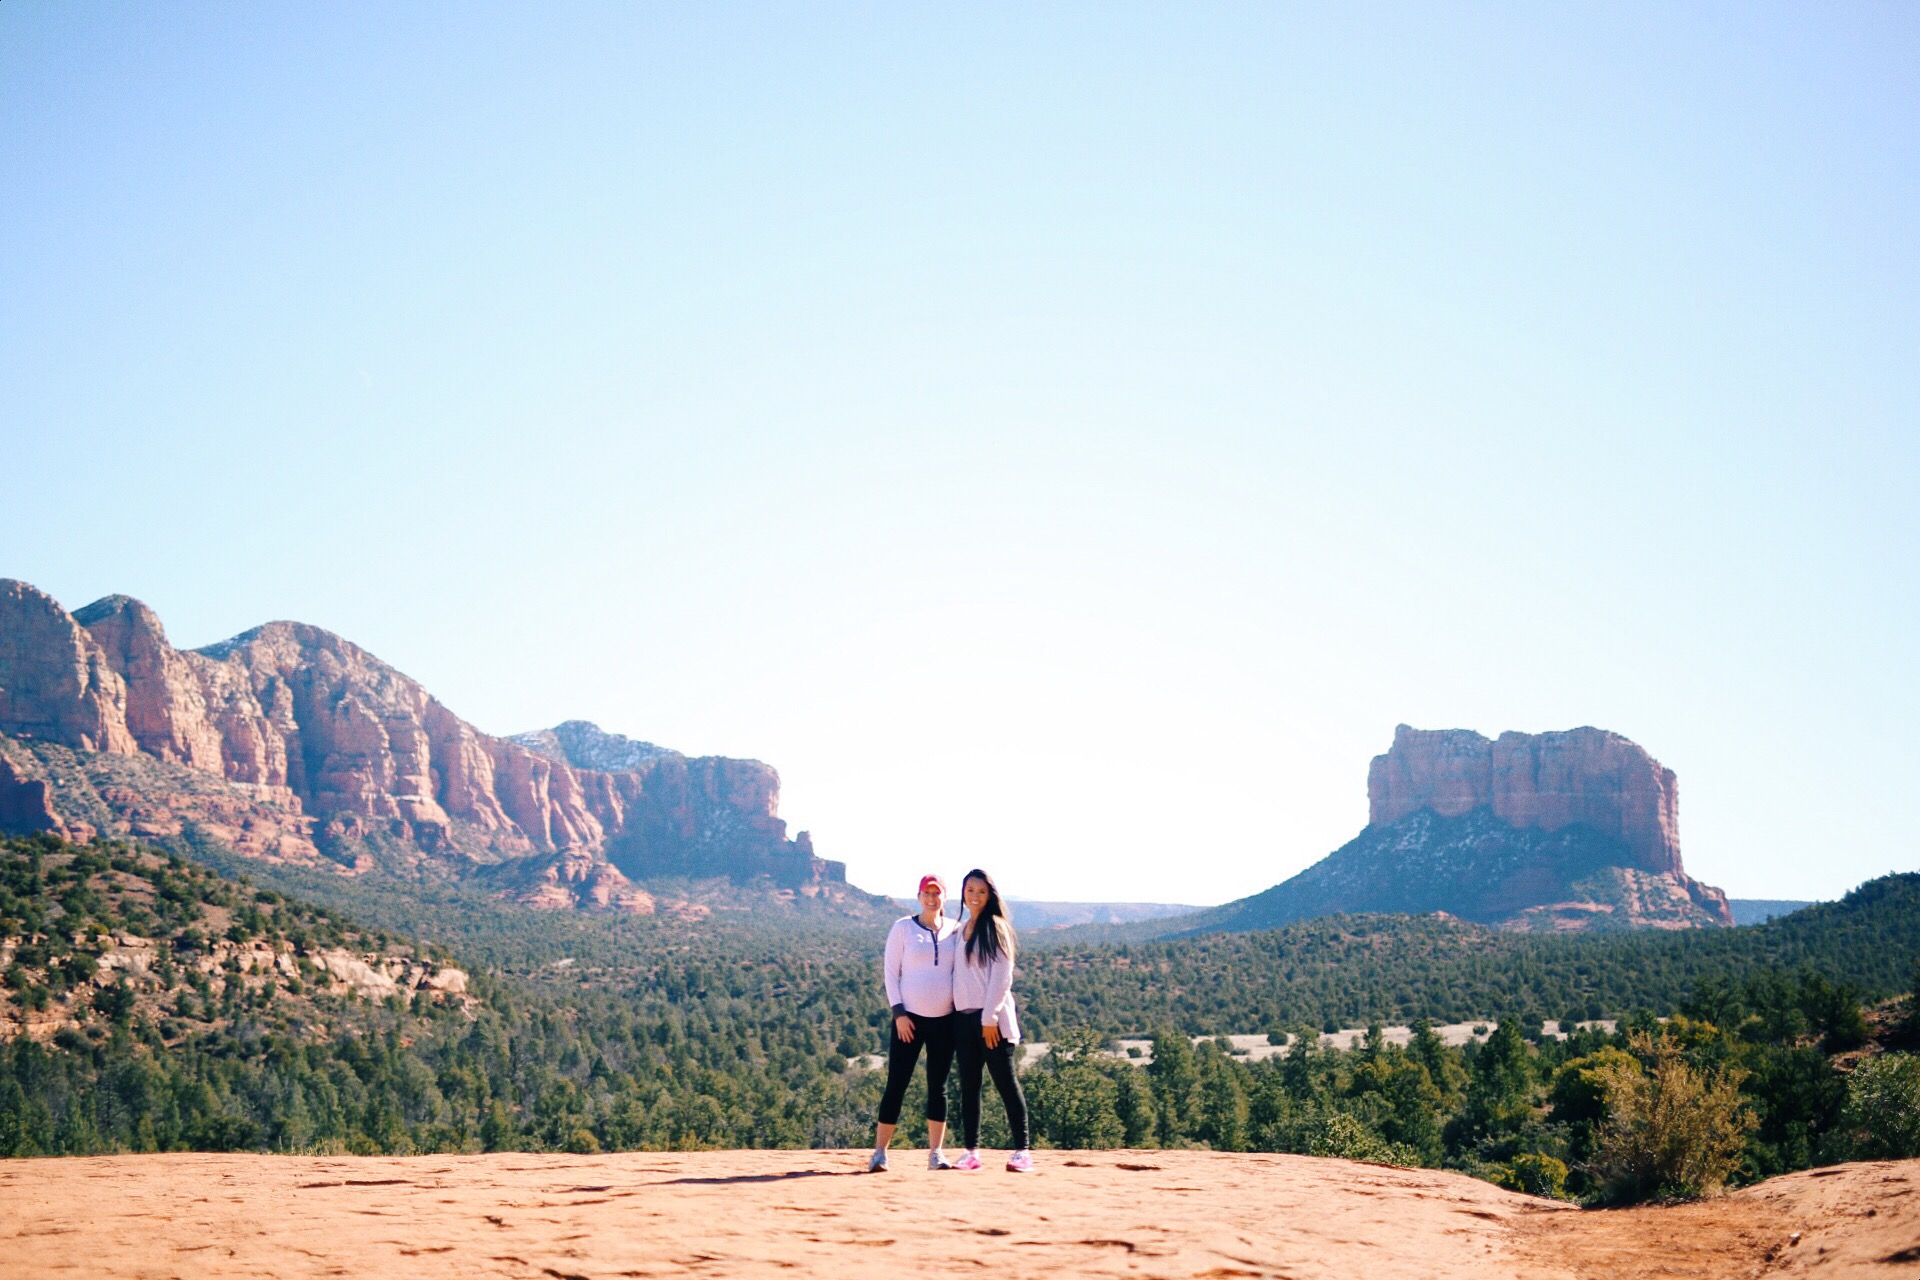 Sedona, Arizona | Landscape Photography | Cathedral Rock Hike | Things To Do In Sedona | Red Rock Hiking in Arizona | elanaloo.com